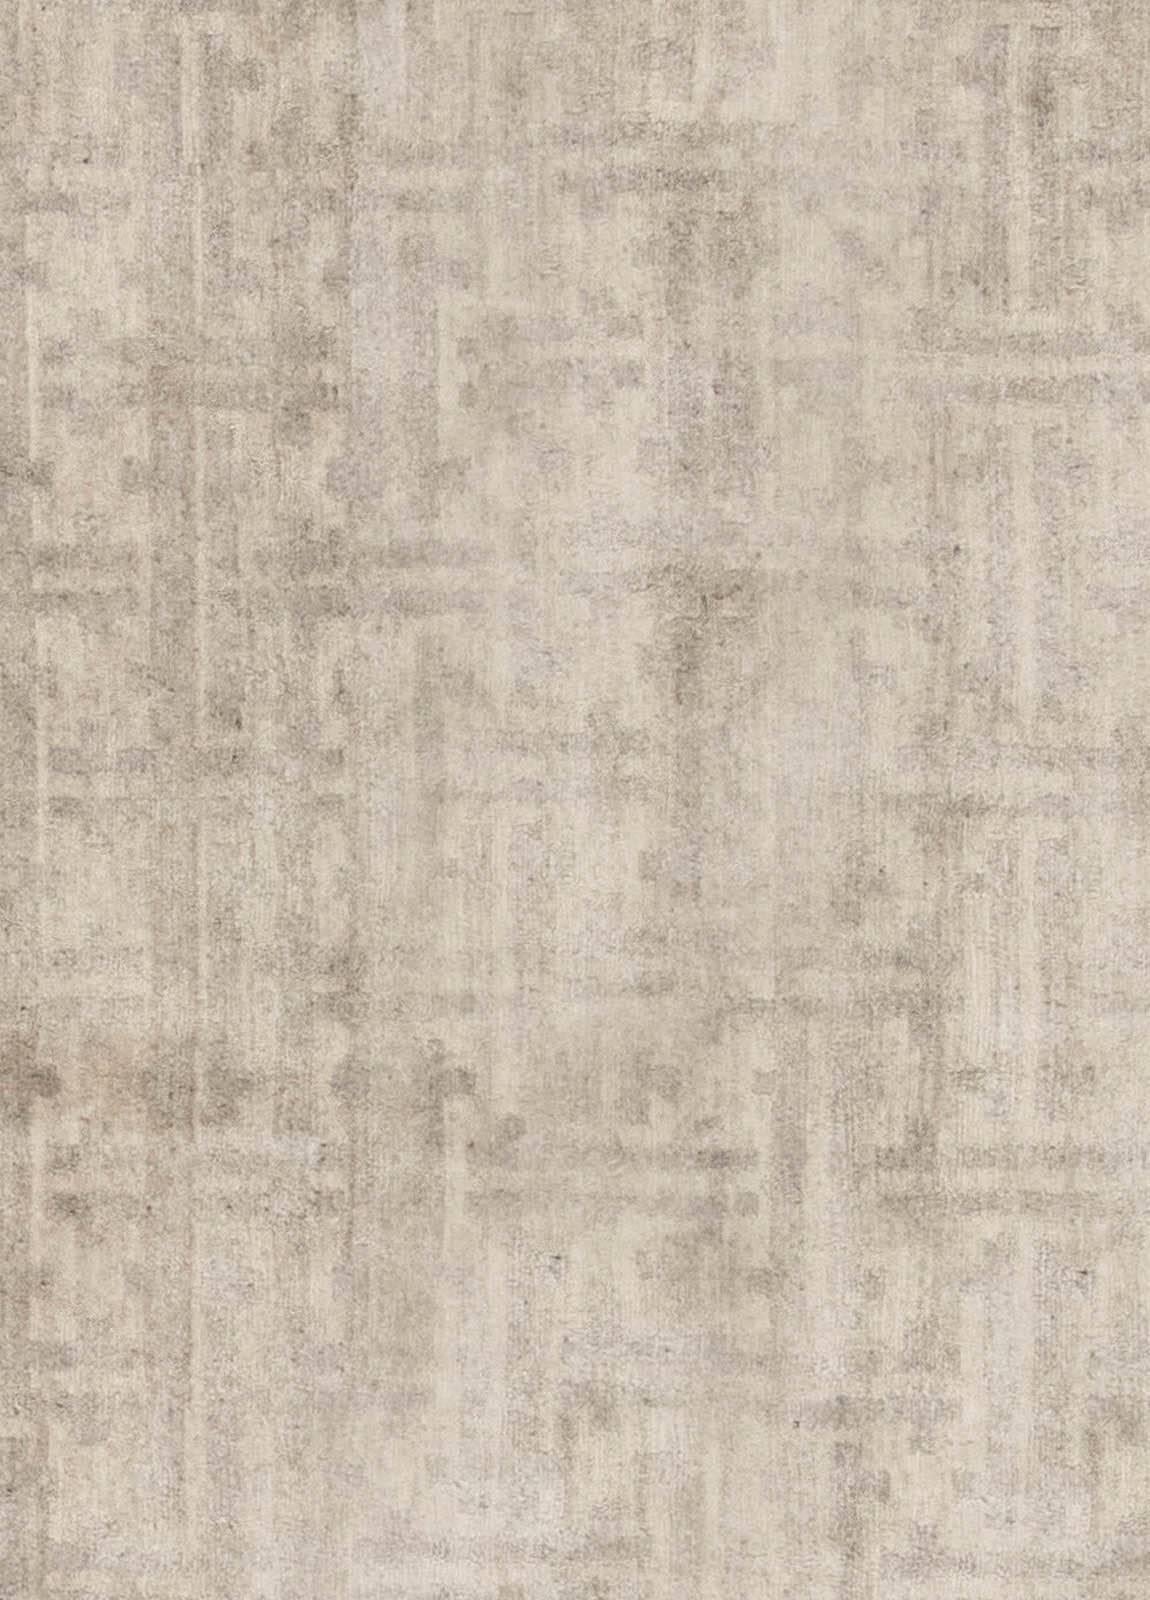 Contemporary terra rug in natural wool by Doris Leslie Blau
Size: 9'2